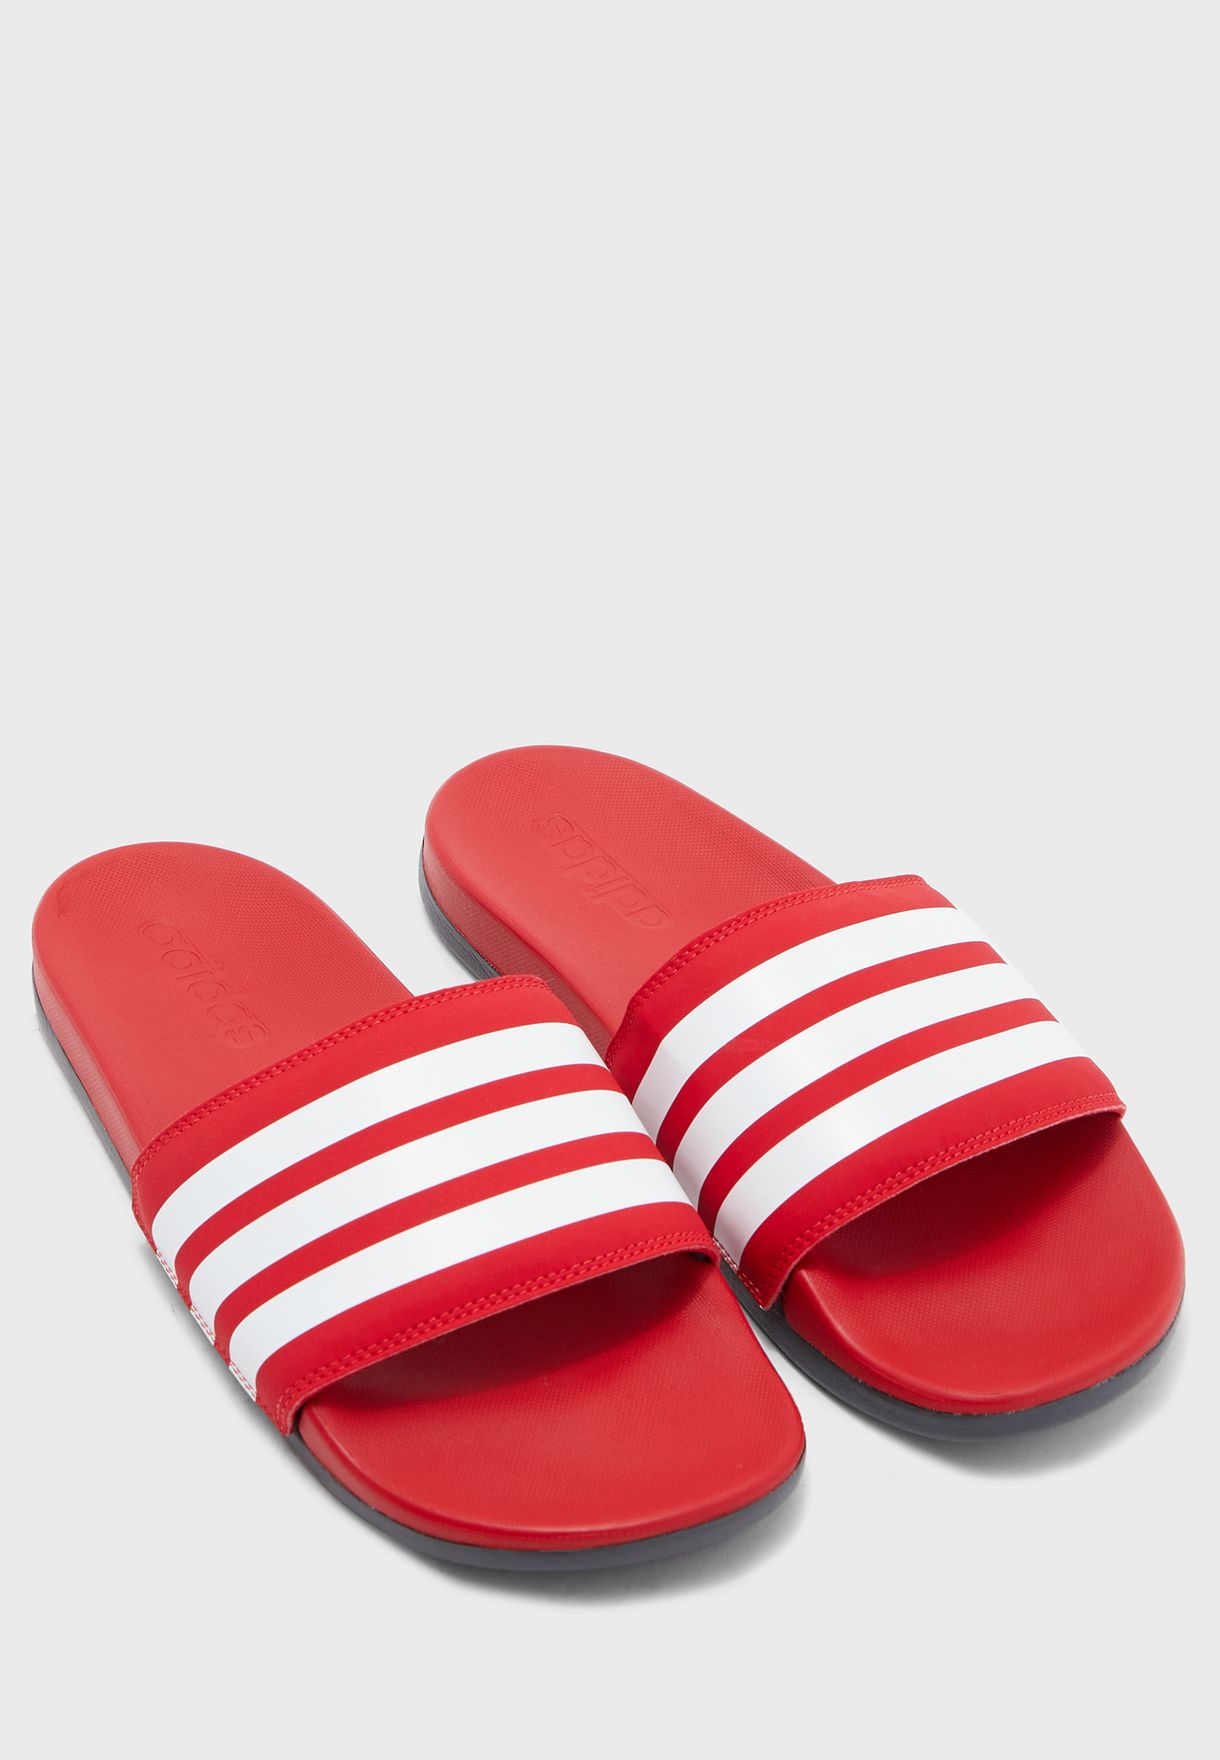 adidas comfort slide sandals